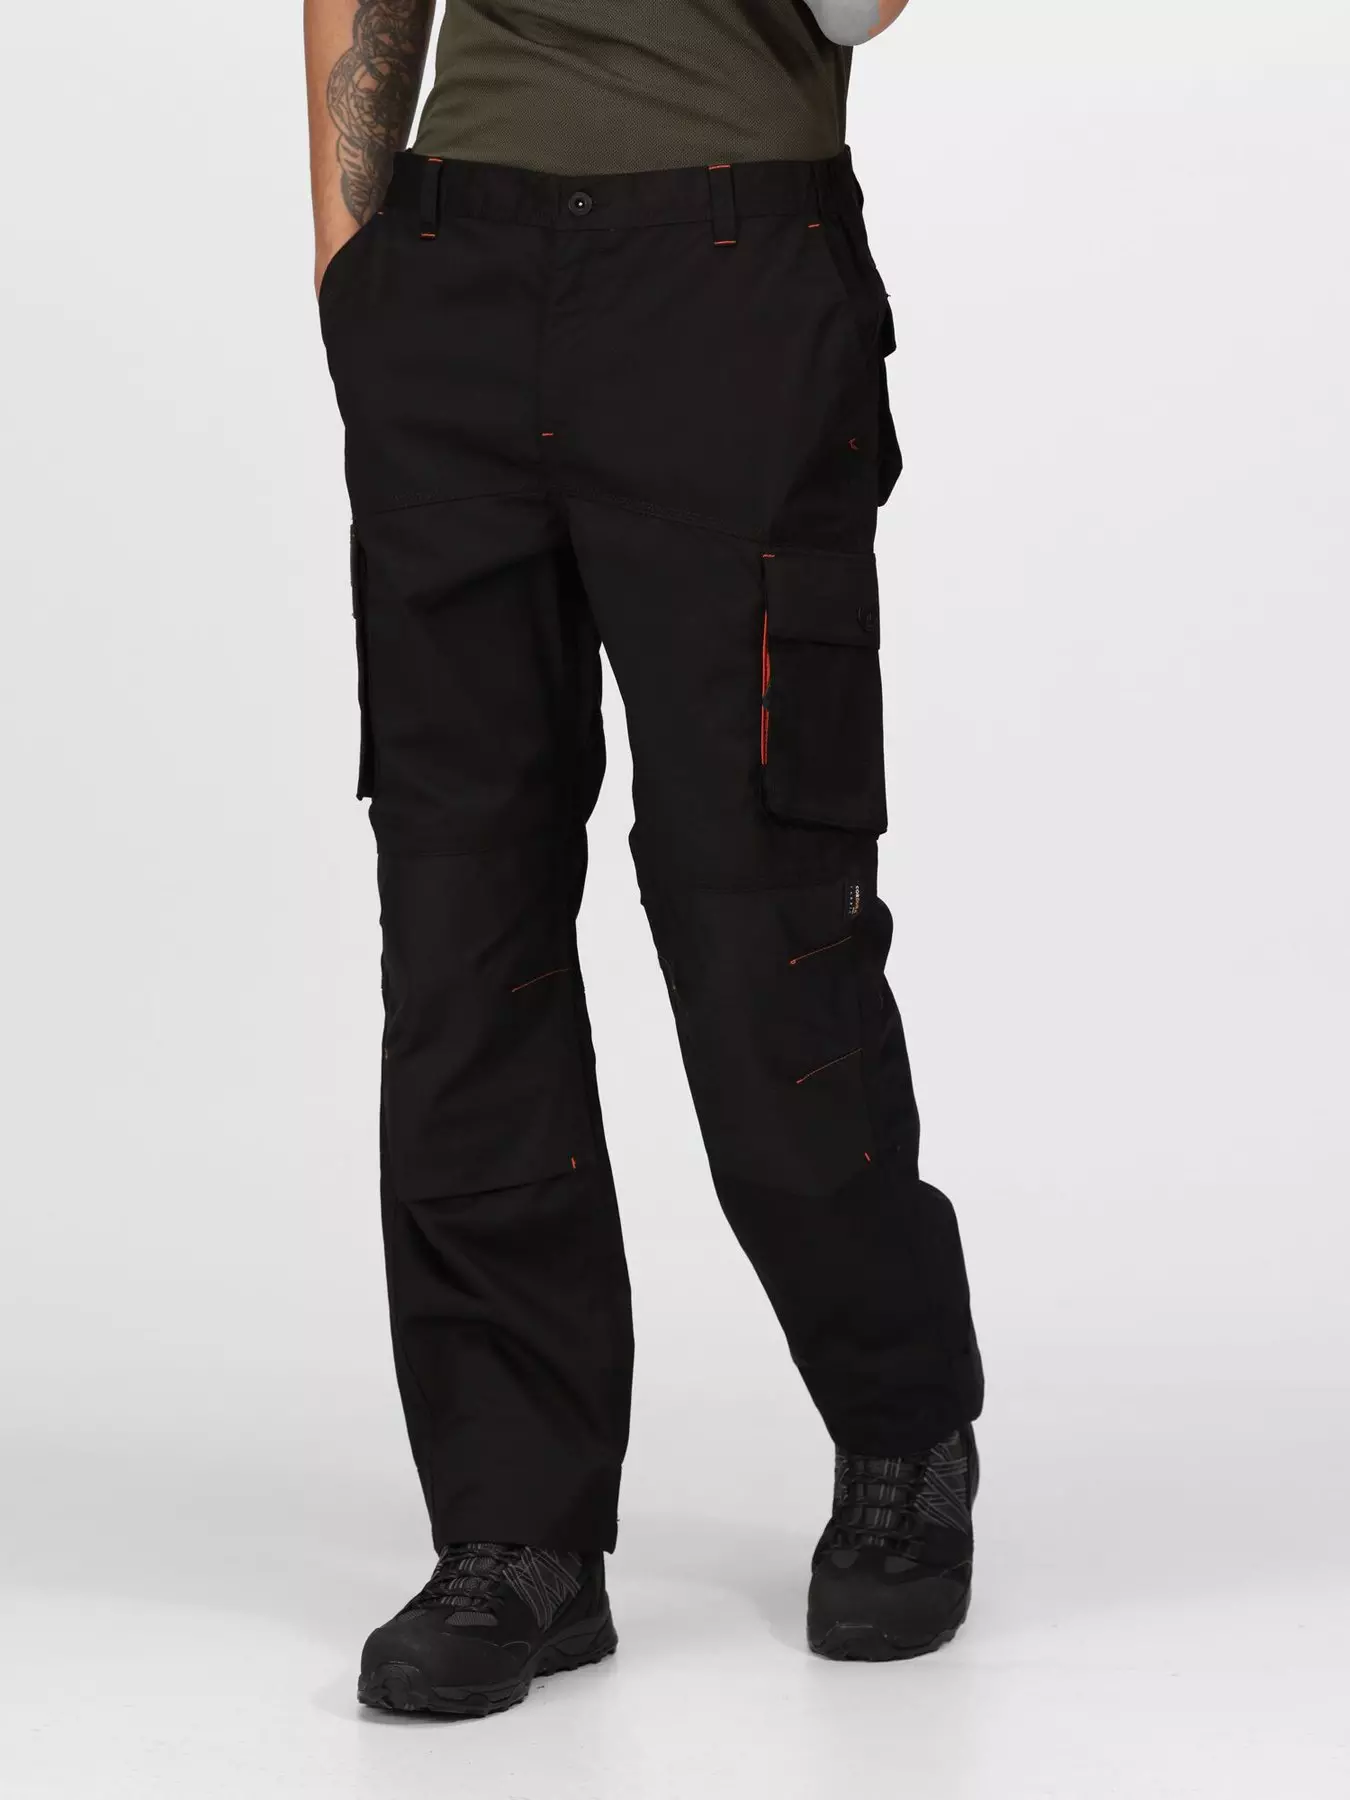 CEWIFO Mens Black Cargo Trousers Track Pants Navy Trousers for Men UK  Waterproof Trousers Walking Trousers for Men UK Mens Trousers Casual Smart  Pants Men Black 28 : : Fashion